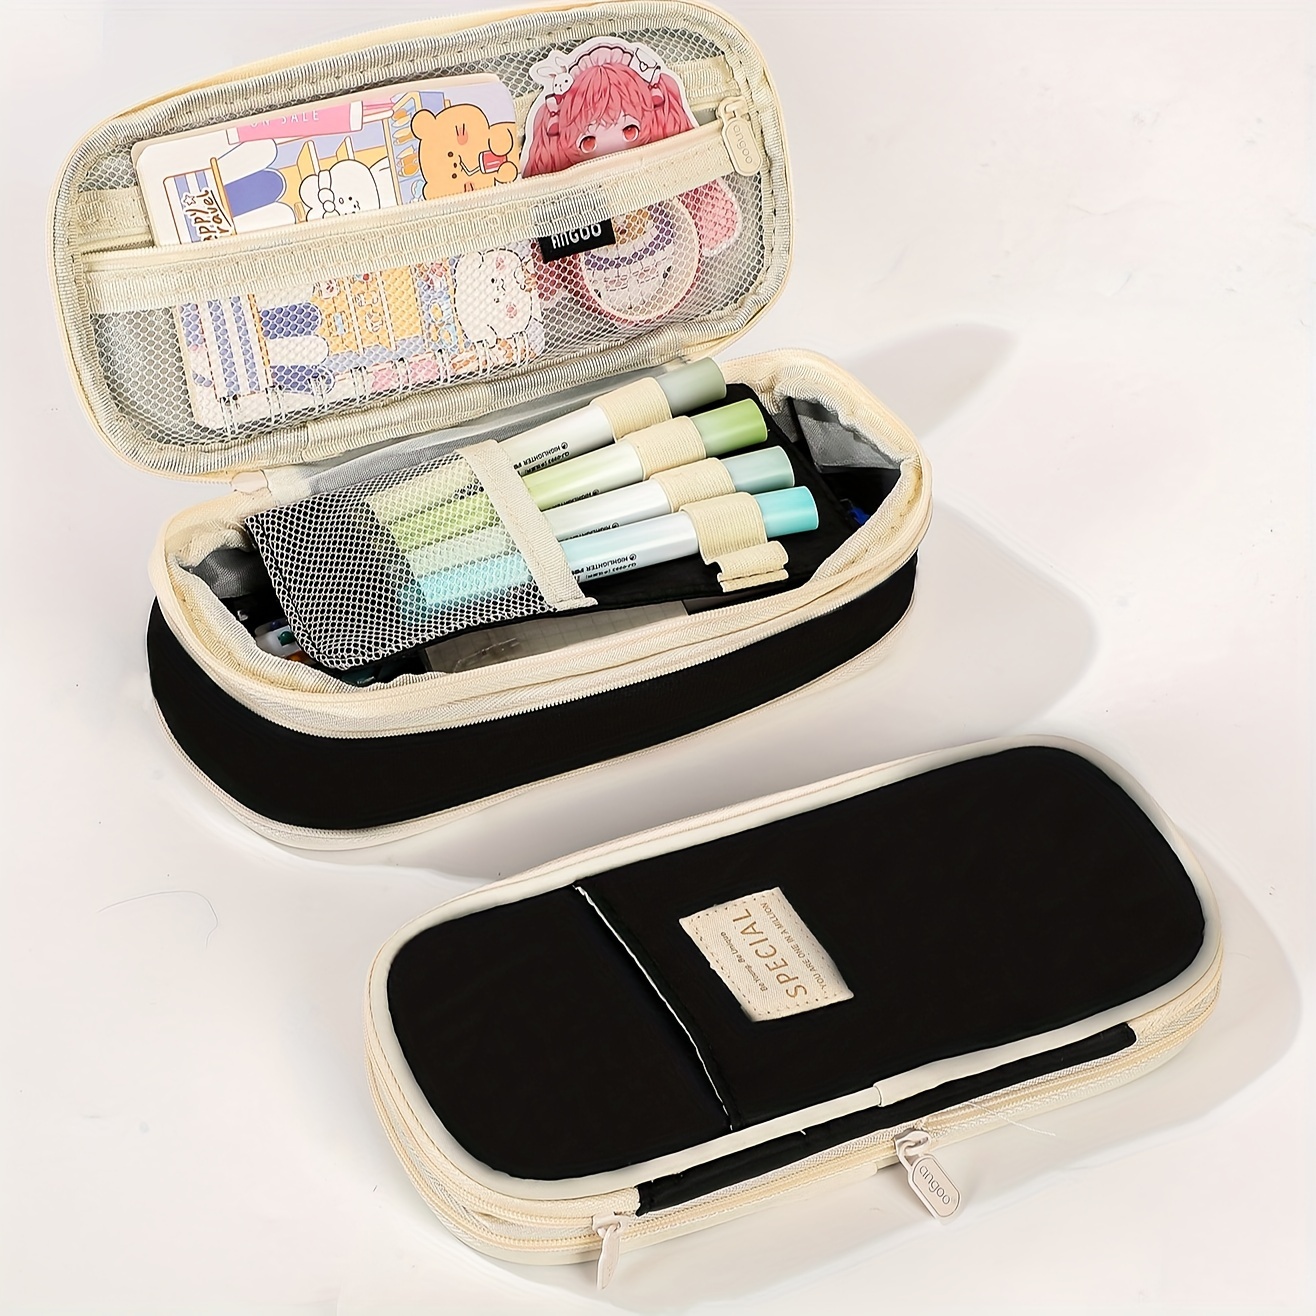 Large Capacity Cute Kawaii School Pencil Cases Stationery Box